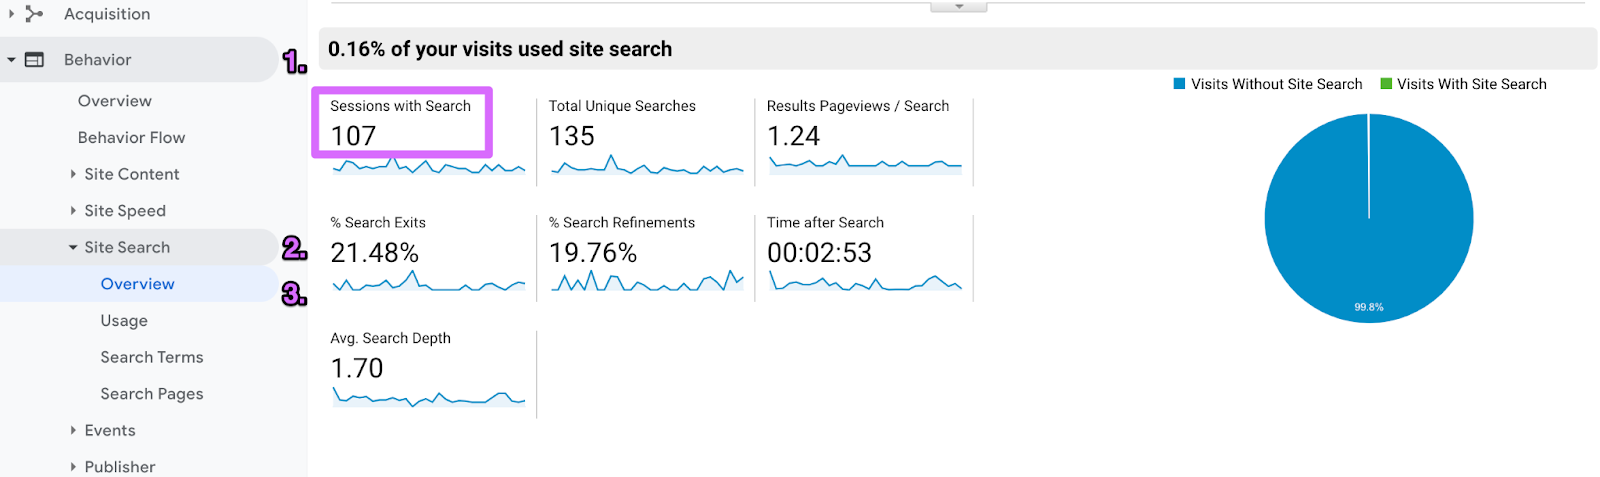 Google analytics site search usage